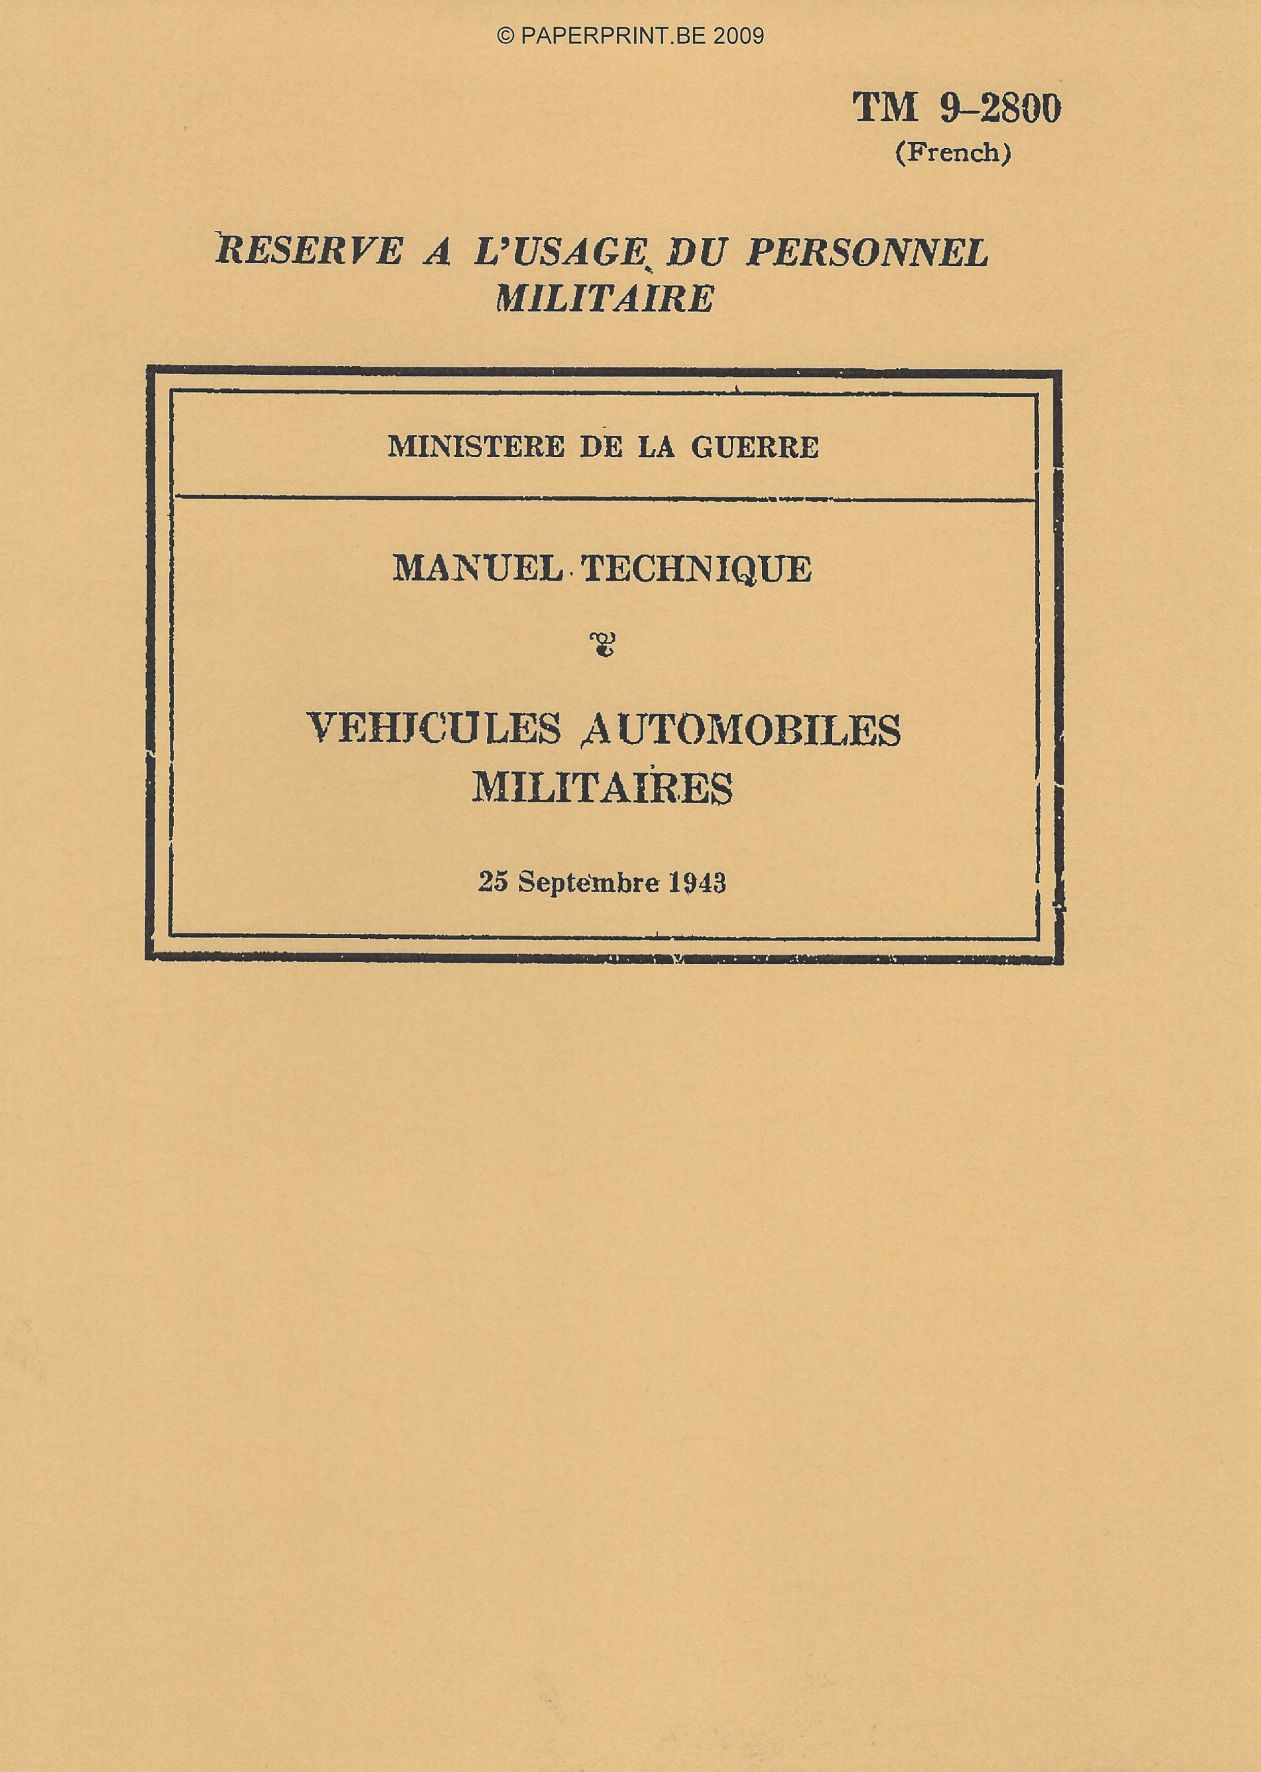 TM 9-2800 1943 FR VEHICULES AUTOMOBILES MILITAIRES